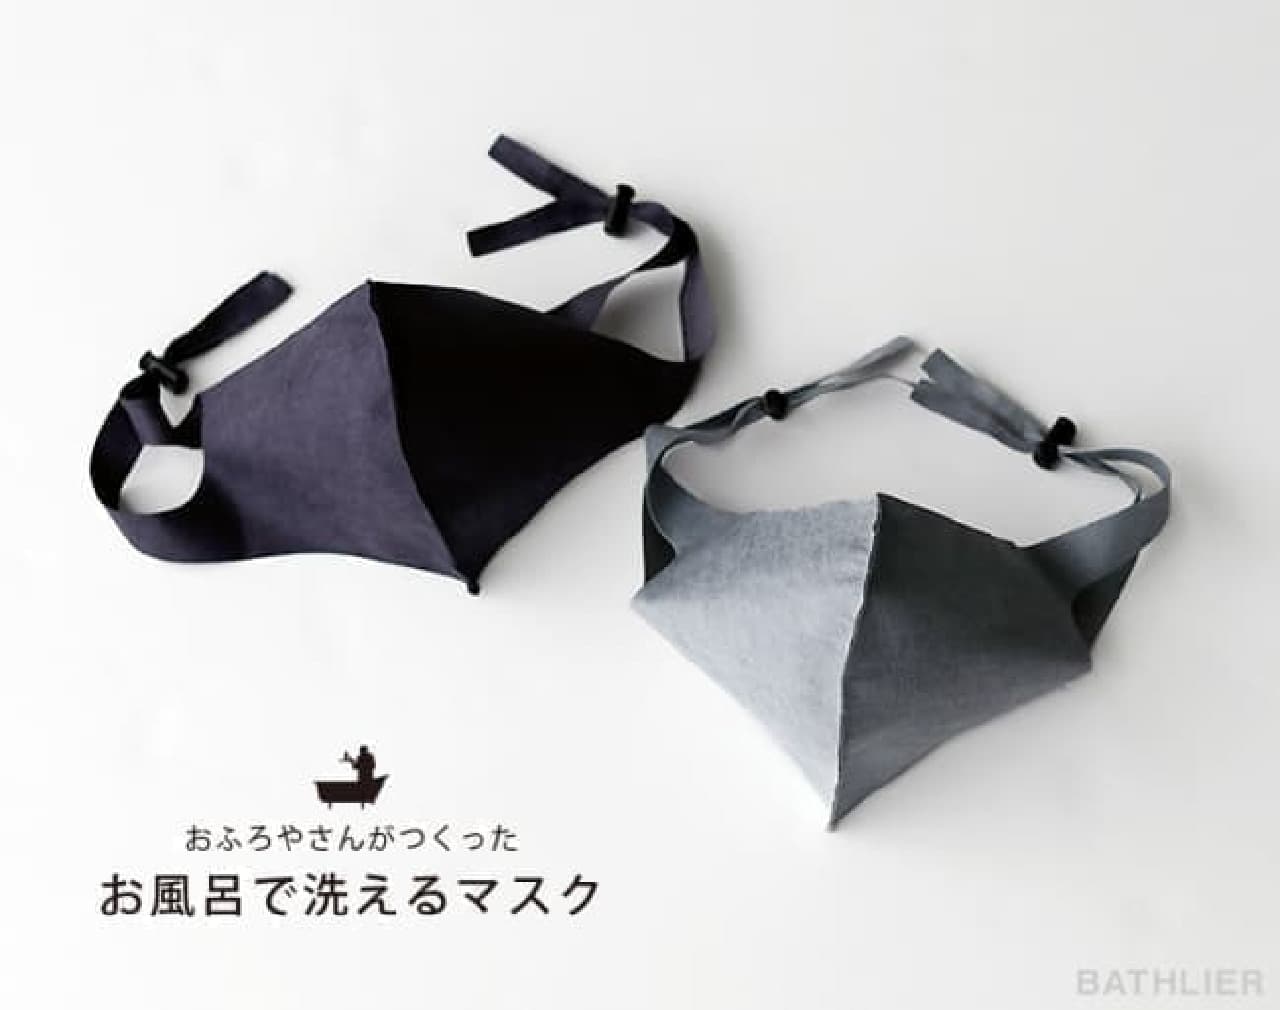 A bath-washable mask made by Furoya-san